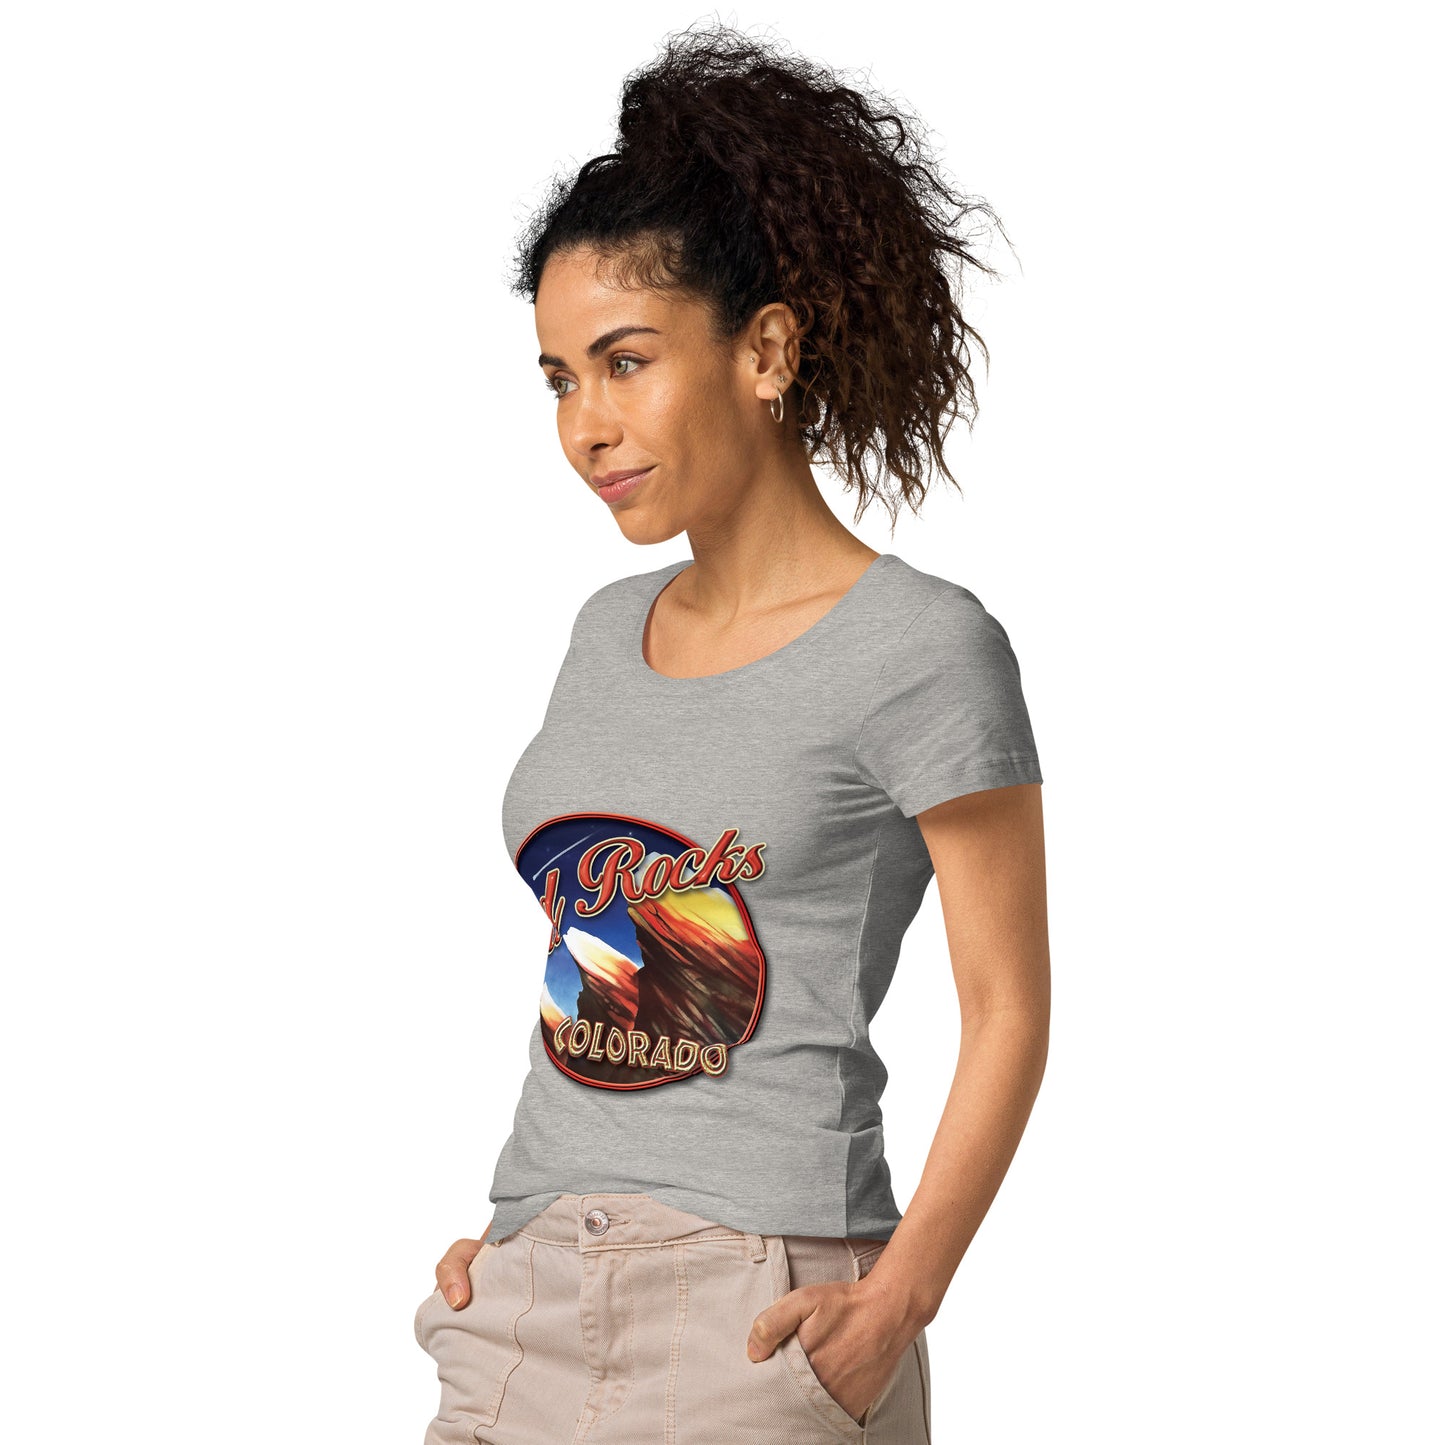 Red Rocks Colorado Women’s basic organic t-shirt